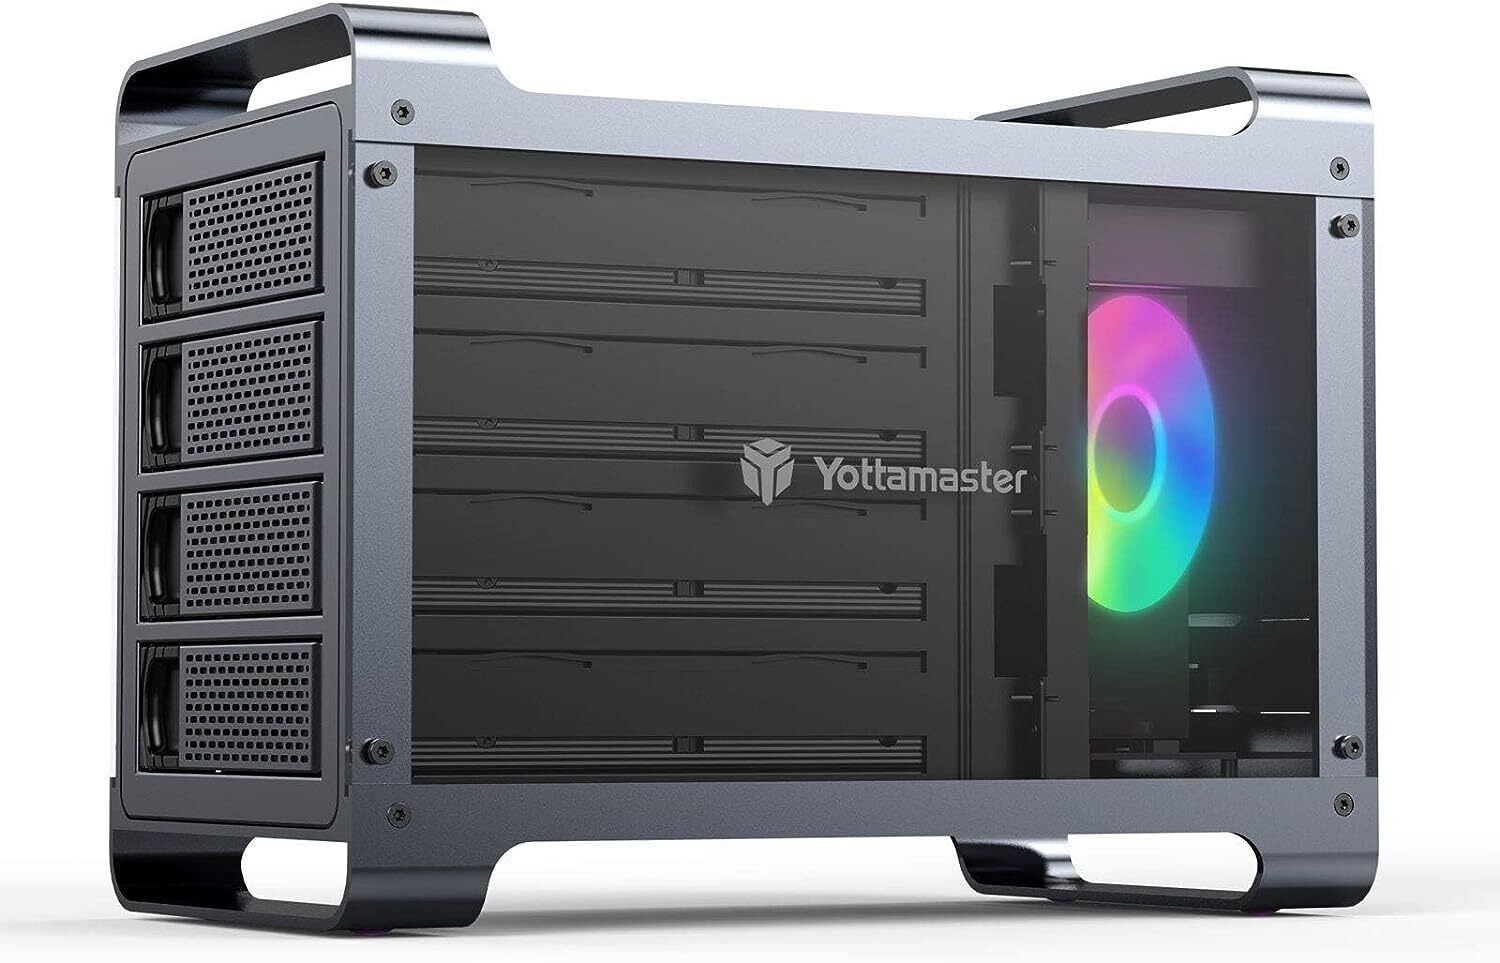 Yottamaster 5Bay RGB Hard Drive Enclosure Type B For 2.5